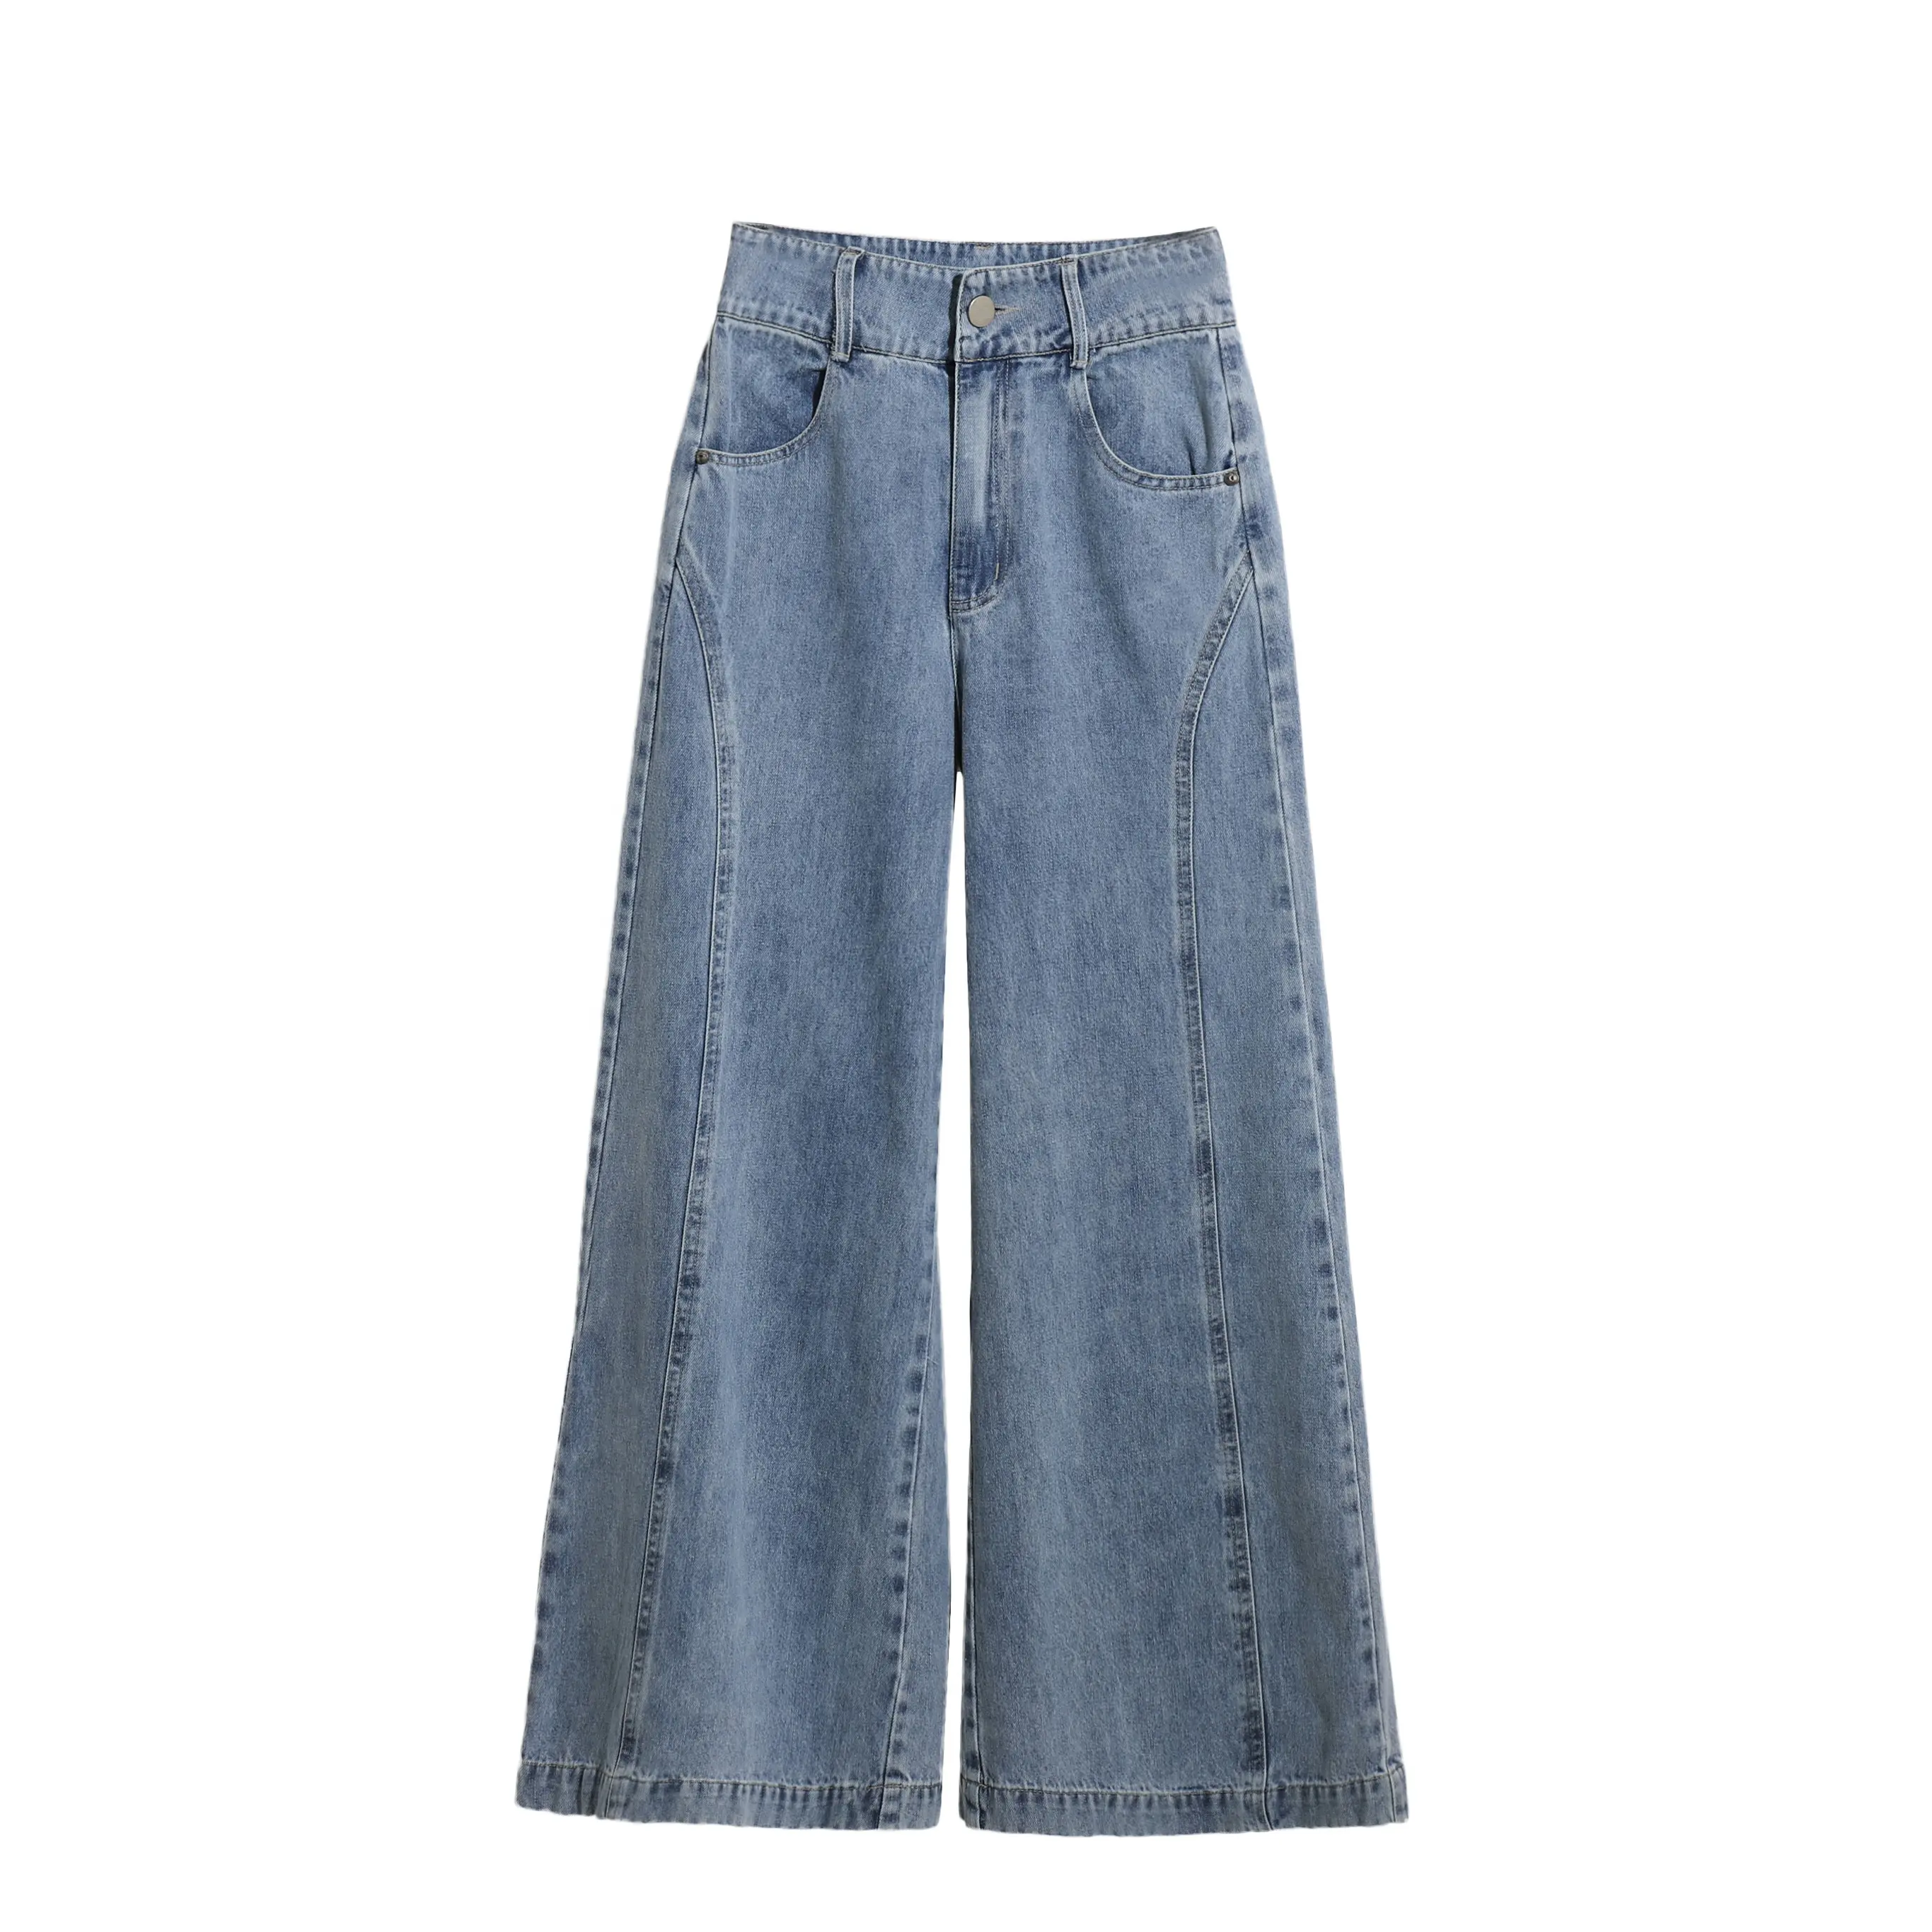 Pantaloni in Denim donna a vita lunga 100% Jeans in cotone a gamba larga su misura Weshallo